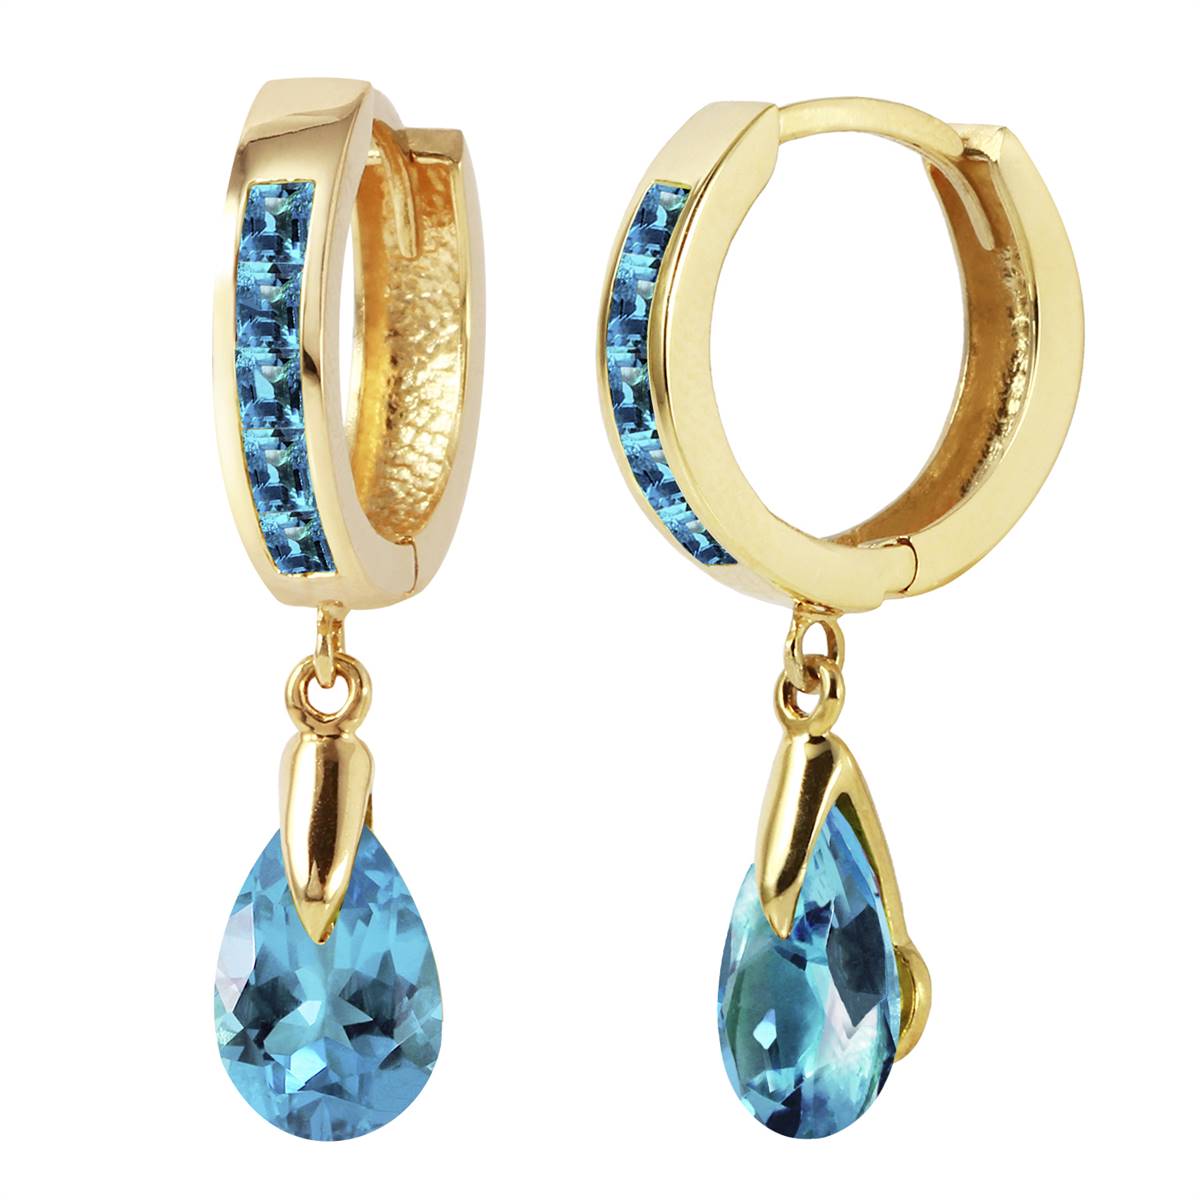 4.2 Carat 14K Solid Yellow Gold Huggie Earrings Dangling Blue Topaz